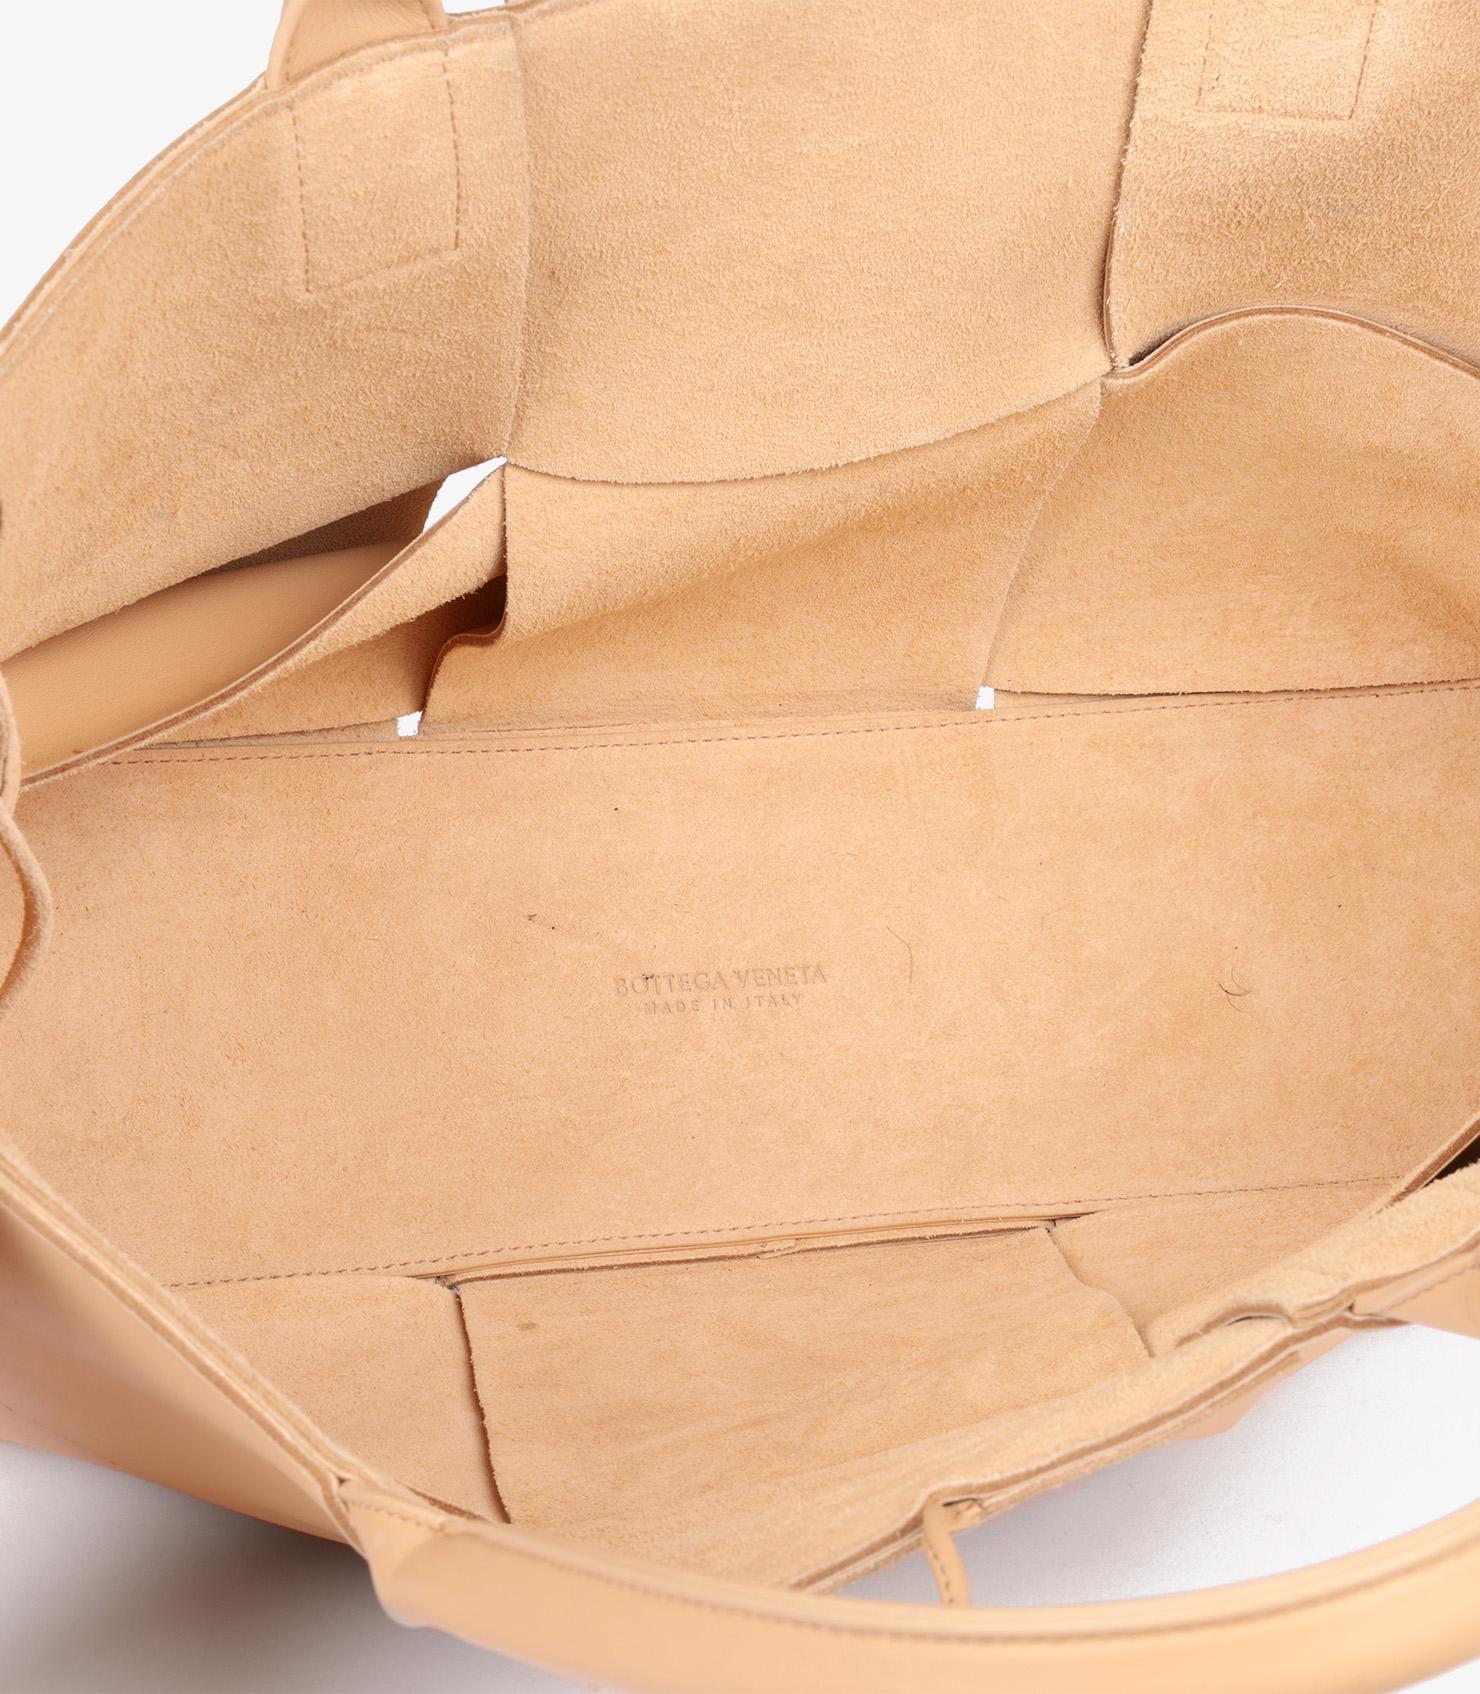 Bottega Veneta Beige Lambskin Leather Medium Acro Tote Bag For Sale 6